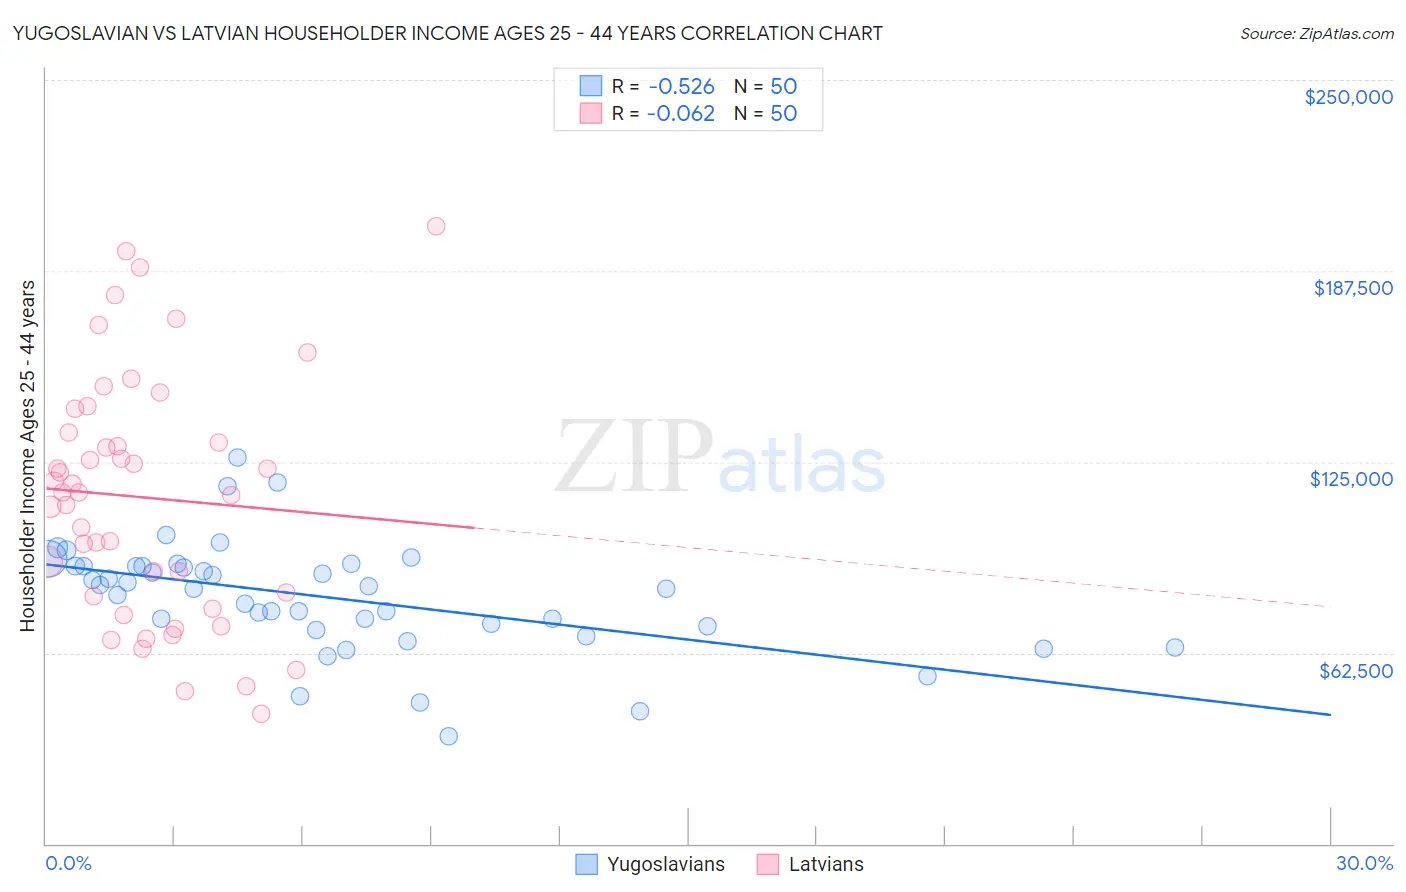 Yugoslavian vs Latvian Householder Income Ages 25 - 44 years